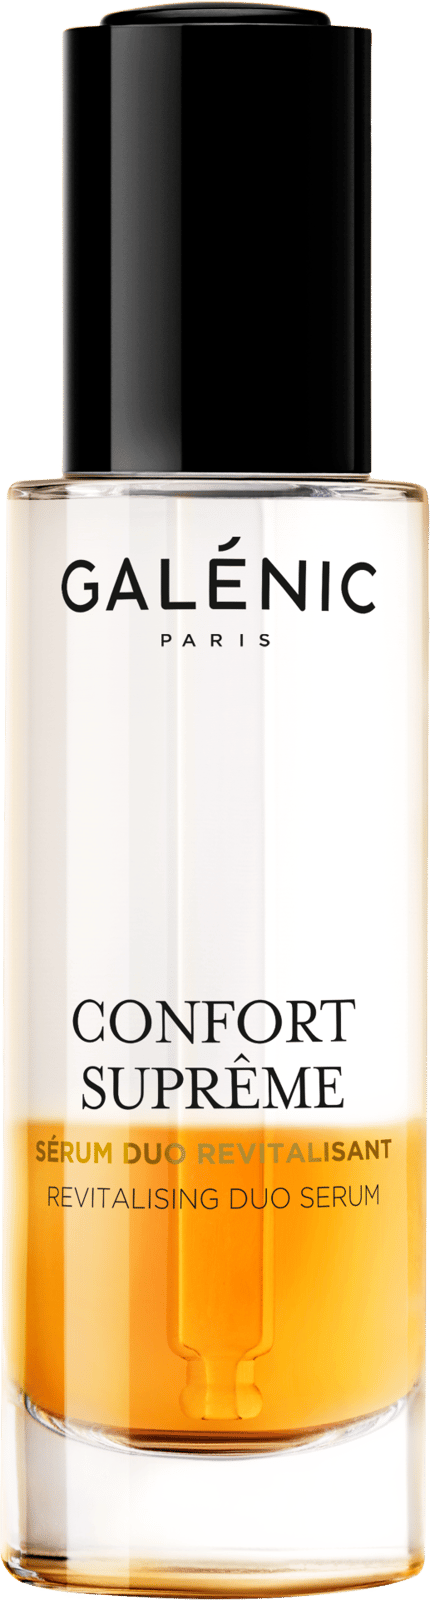 Galénic Confort Suprême Revitalizing Duo Serum 30ml (1.01fl oz)